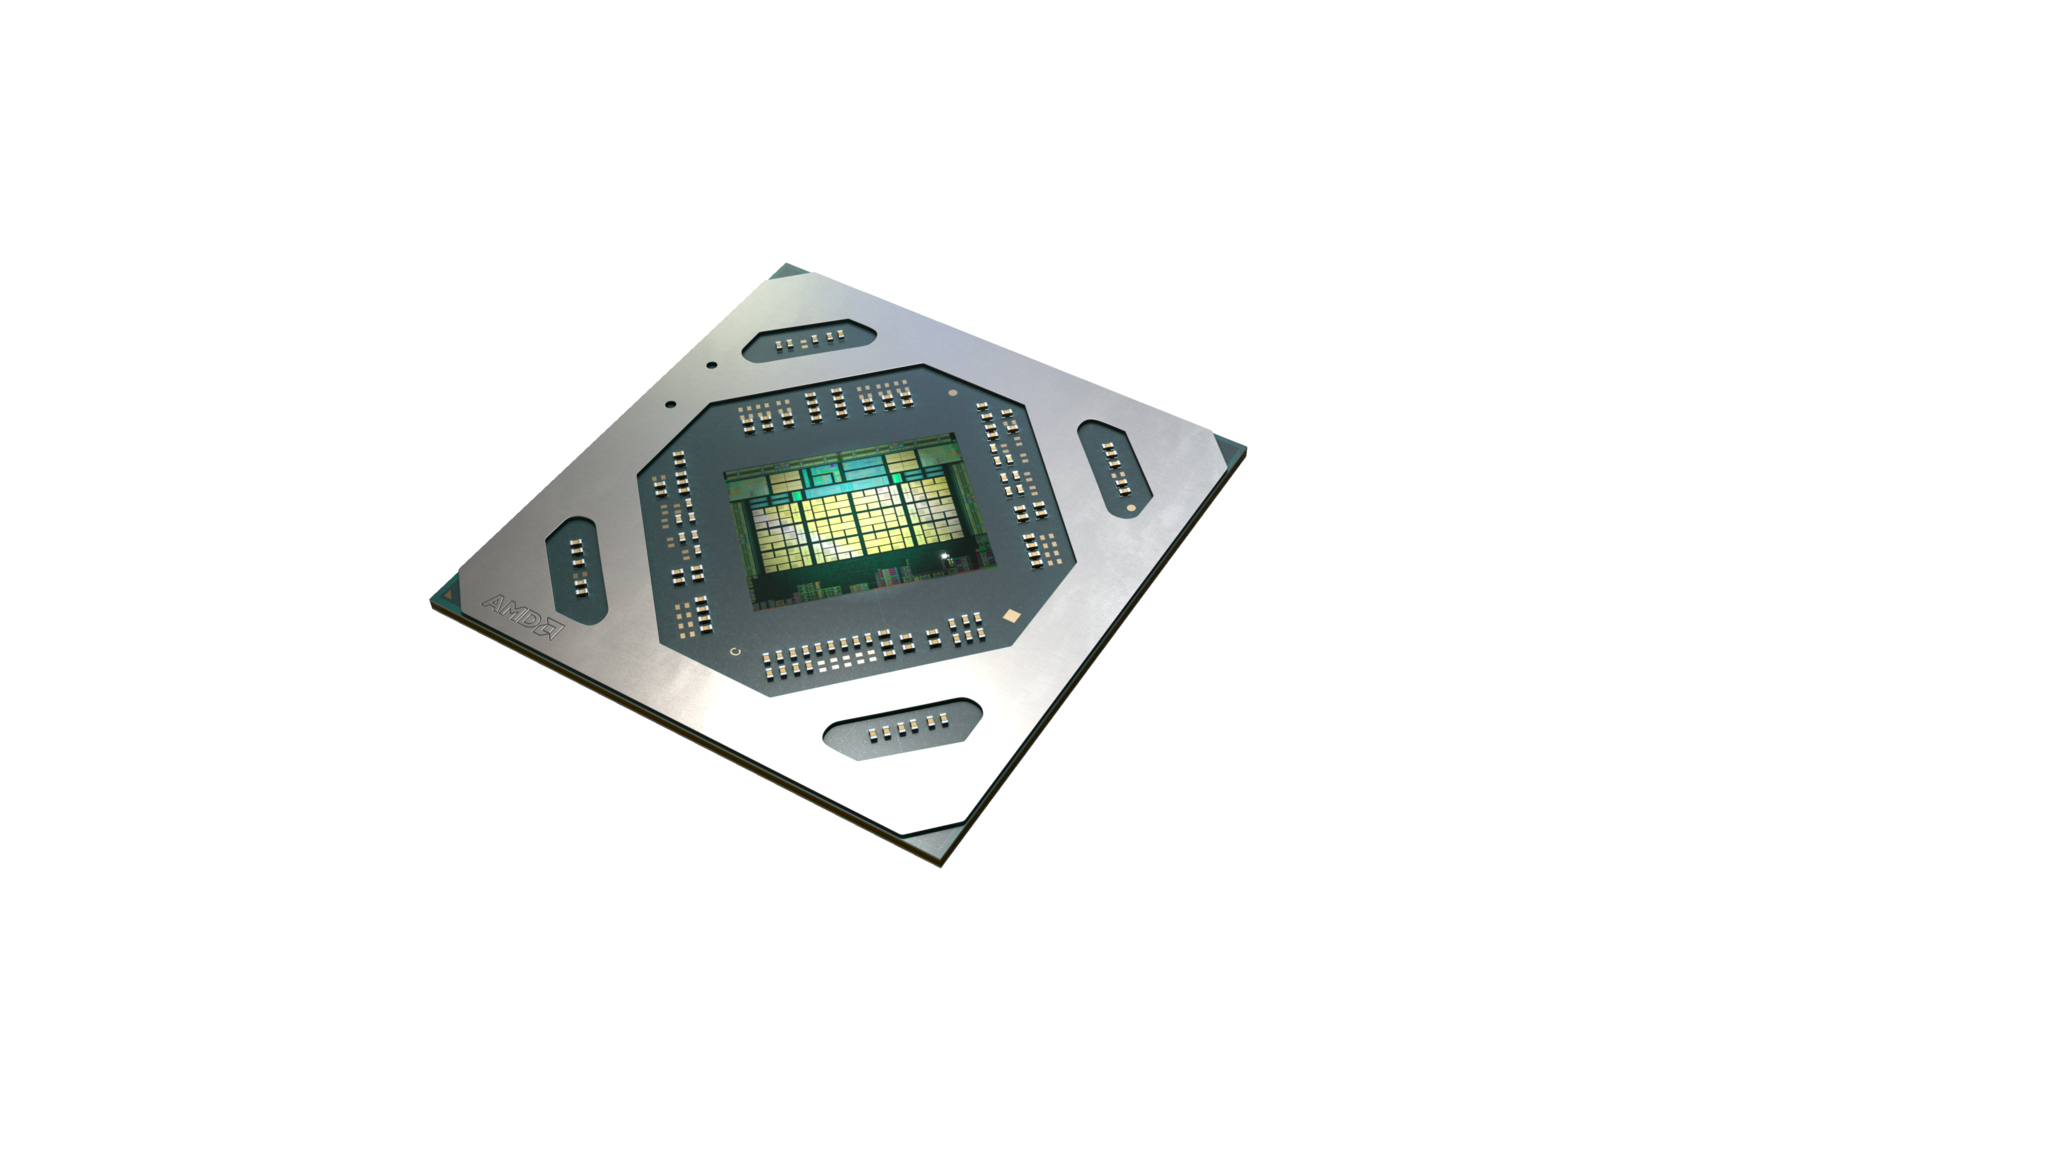 3 AMD เปิดตัวกราฟิกการ์ด Radeon™ RX 5500 Series: ความคมชัดของภาพที่เหนือกว่า ฟีเจอร์การทำงานชั้นเยี่ยม และประสบการณ์การเล่นเกมประสิทธิภาพสูง